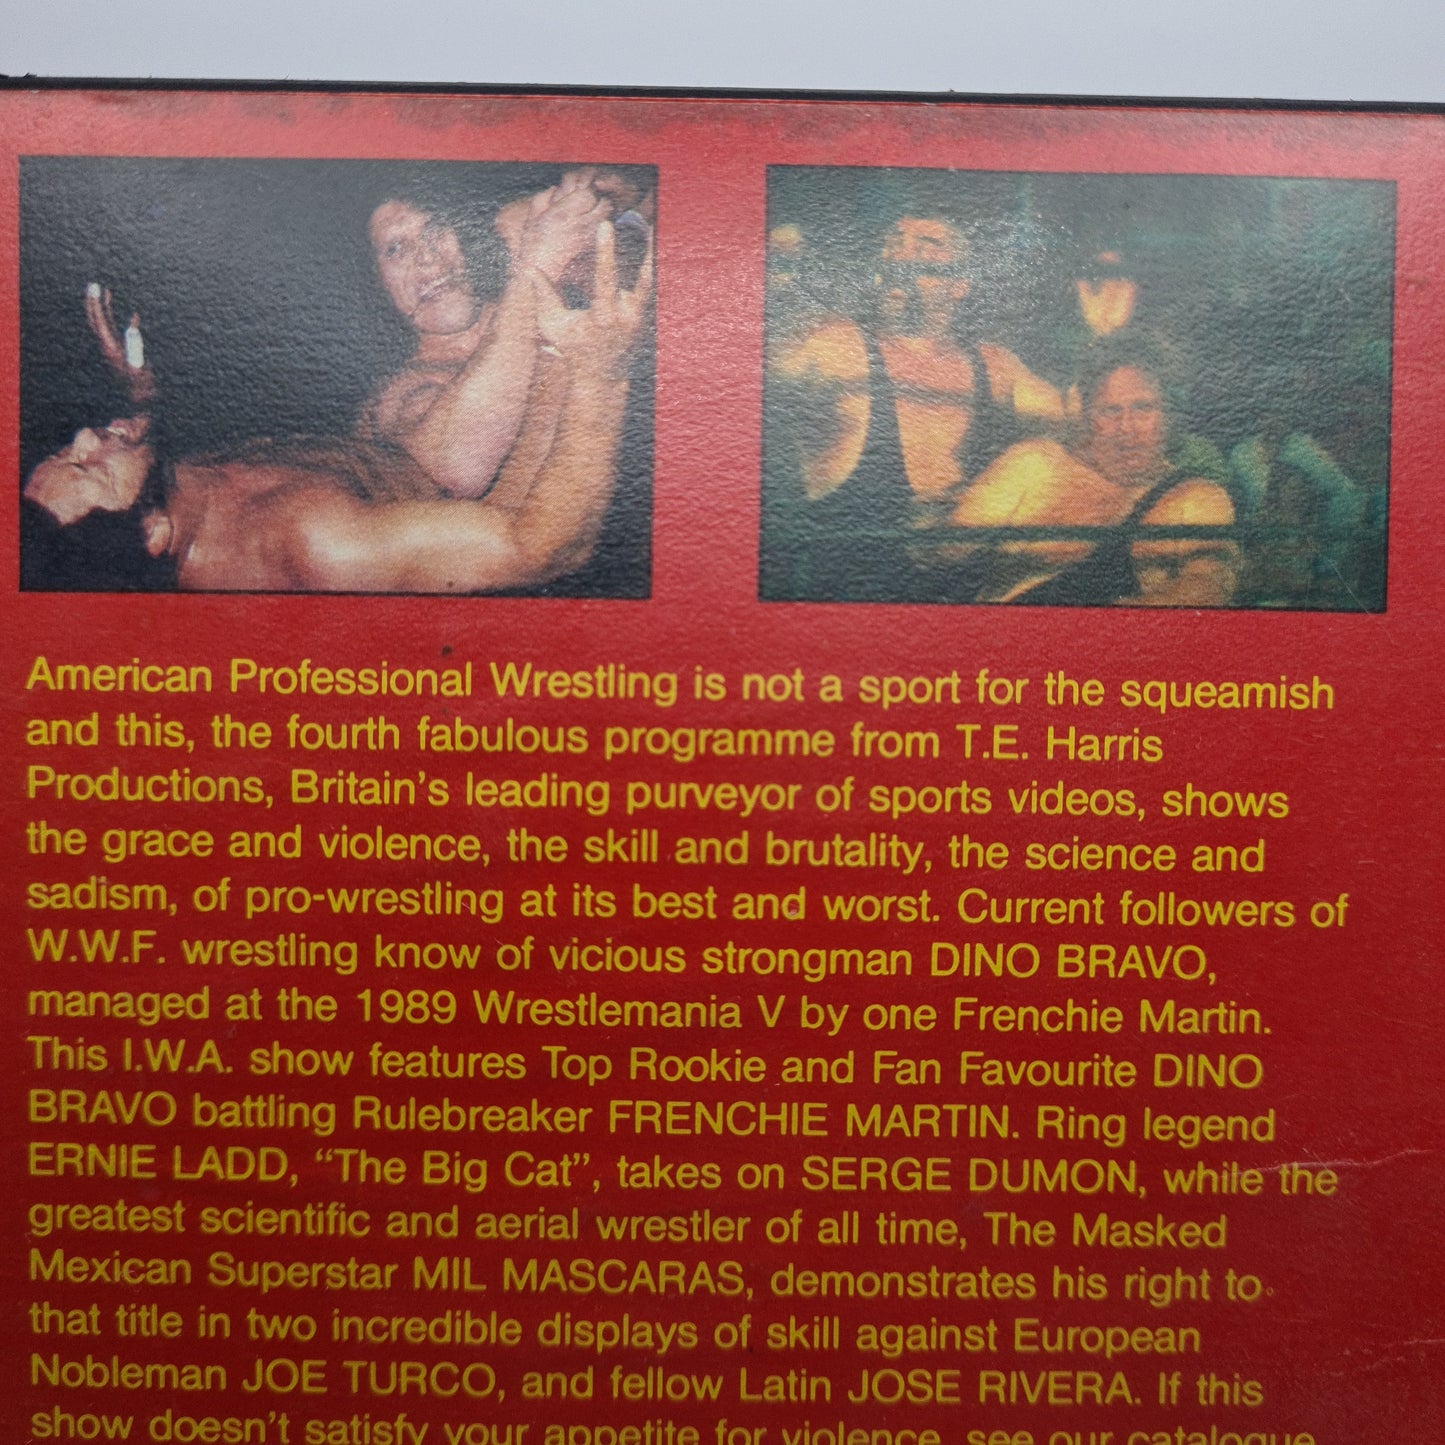 International American Wrestling WWF VHS